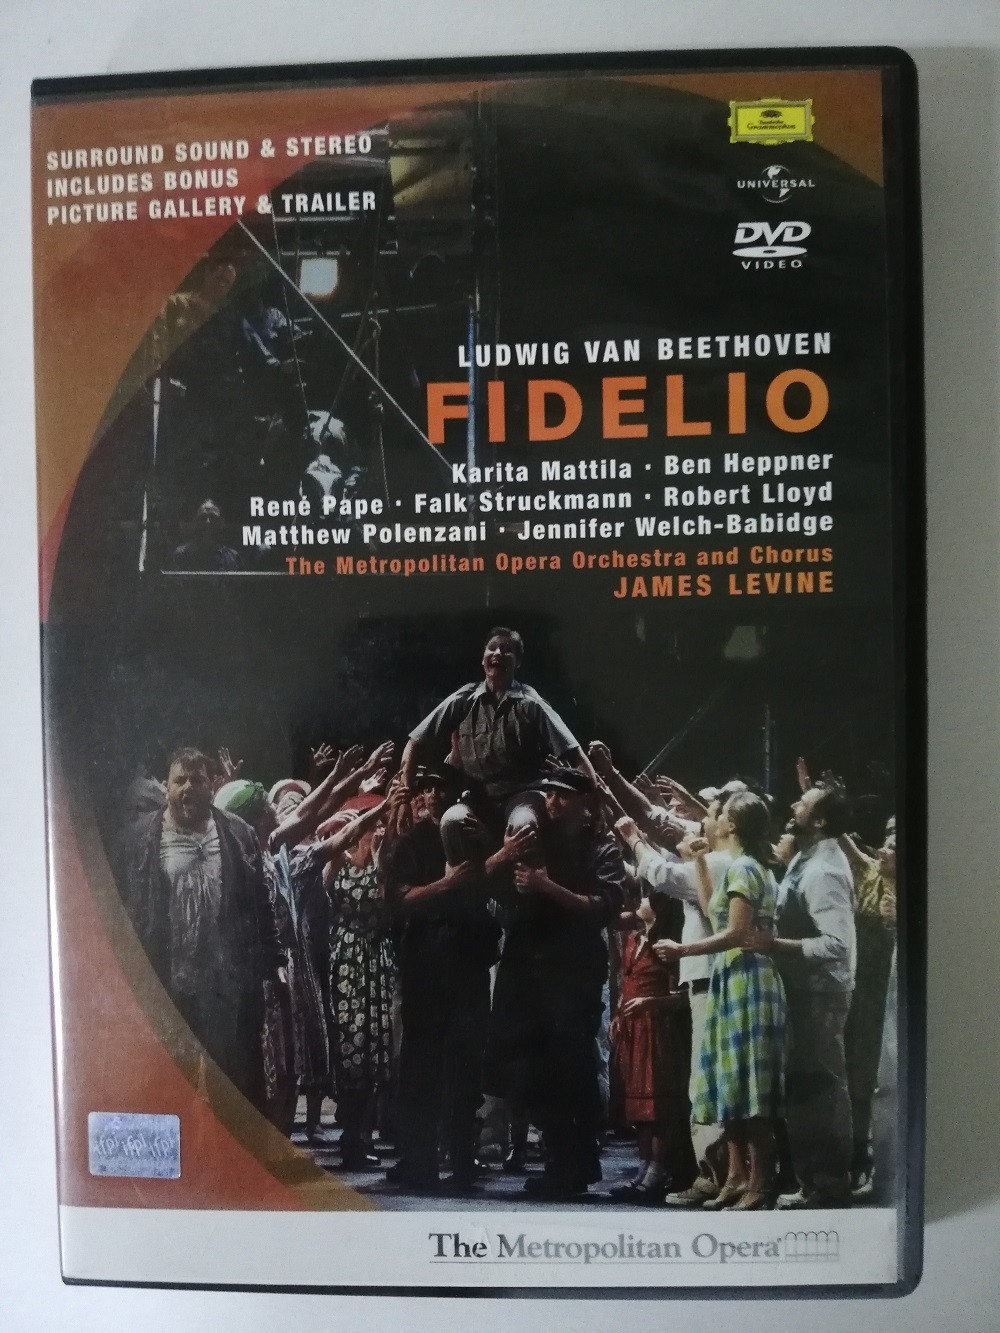 Imagen DVD FIDELIO - THE METROPOLITAN OPERA ORCHESTRA AND CHORUS 1